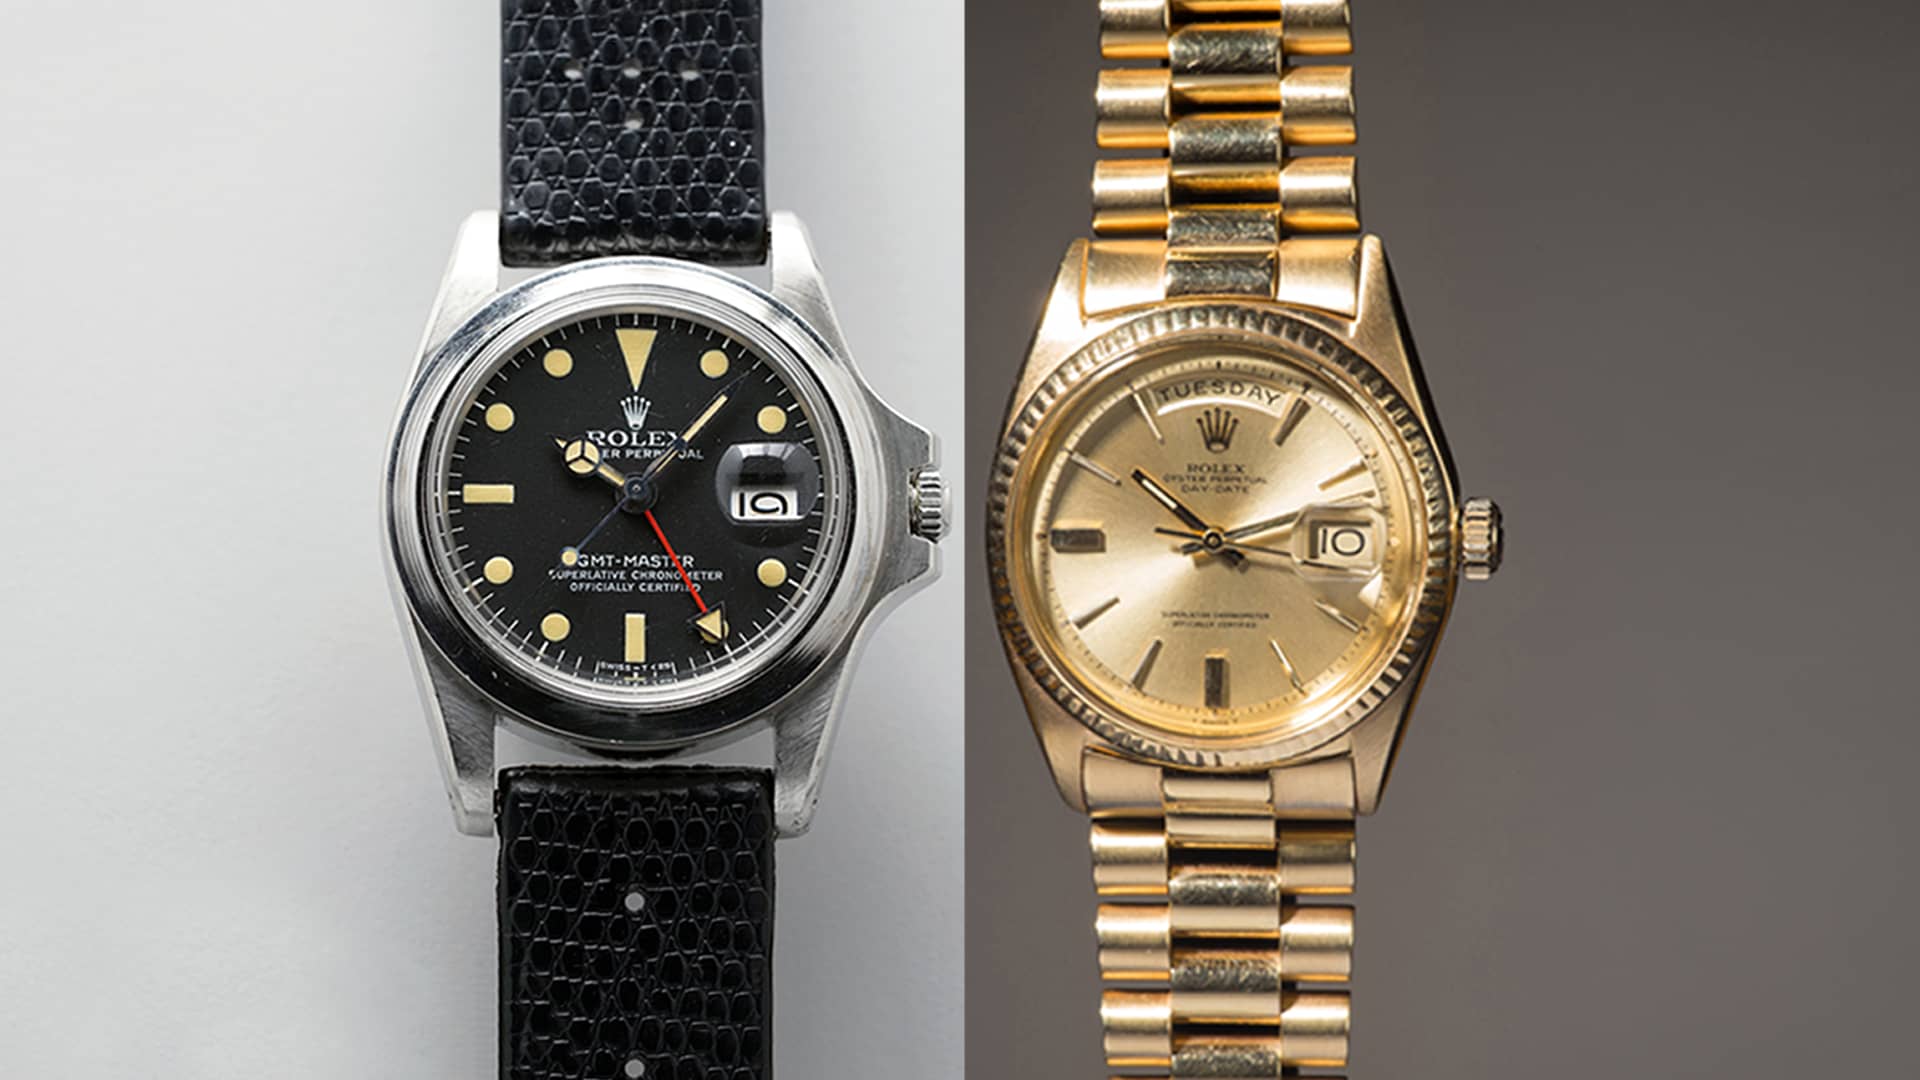 Jack Nicklaus' gold Rolex watch sells 